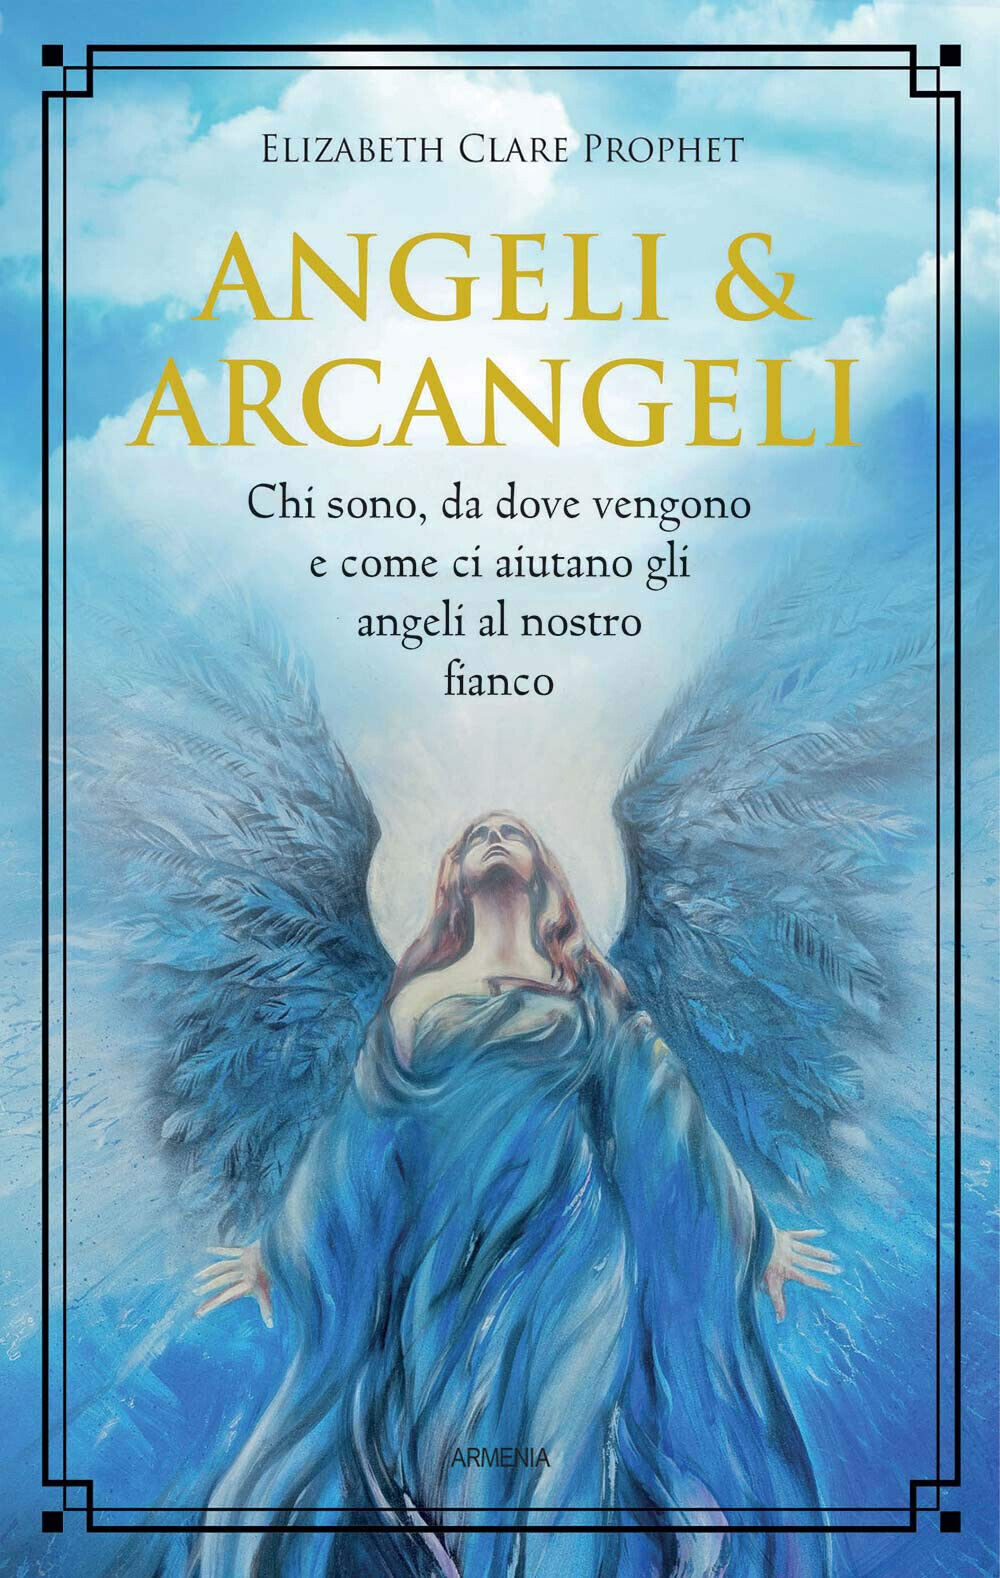 Angeli & arcangeli - Elizabeth Clare Prophet - Armenia, 2021 libro usato